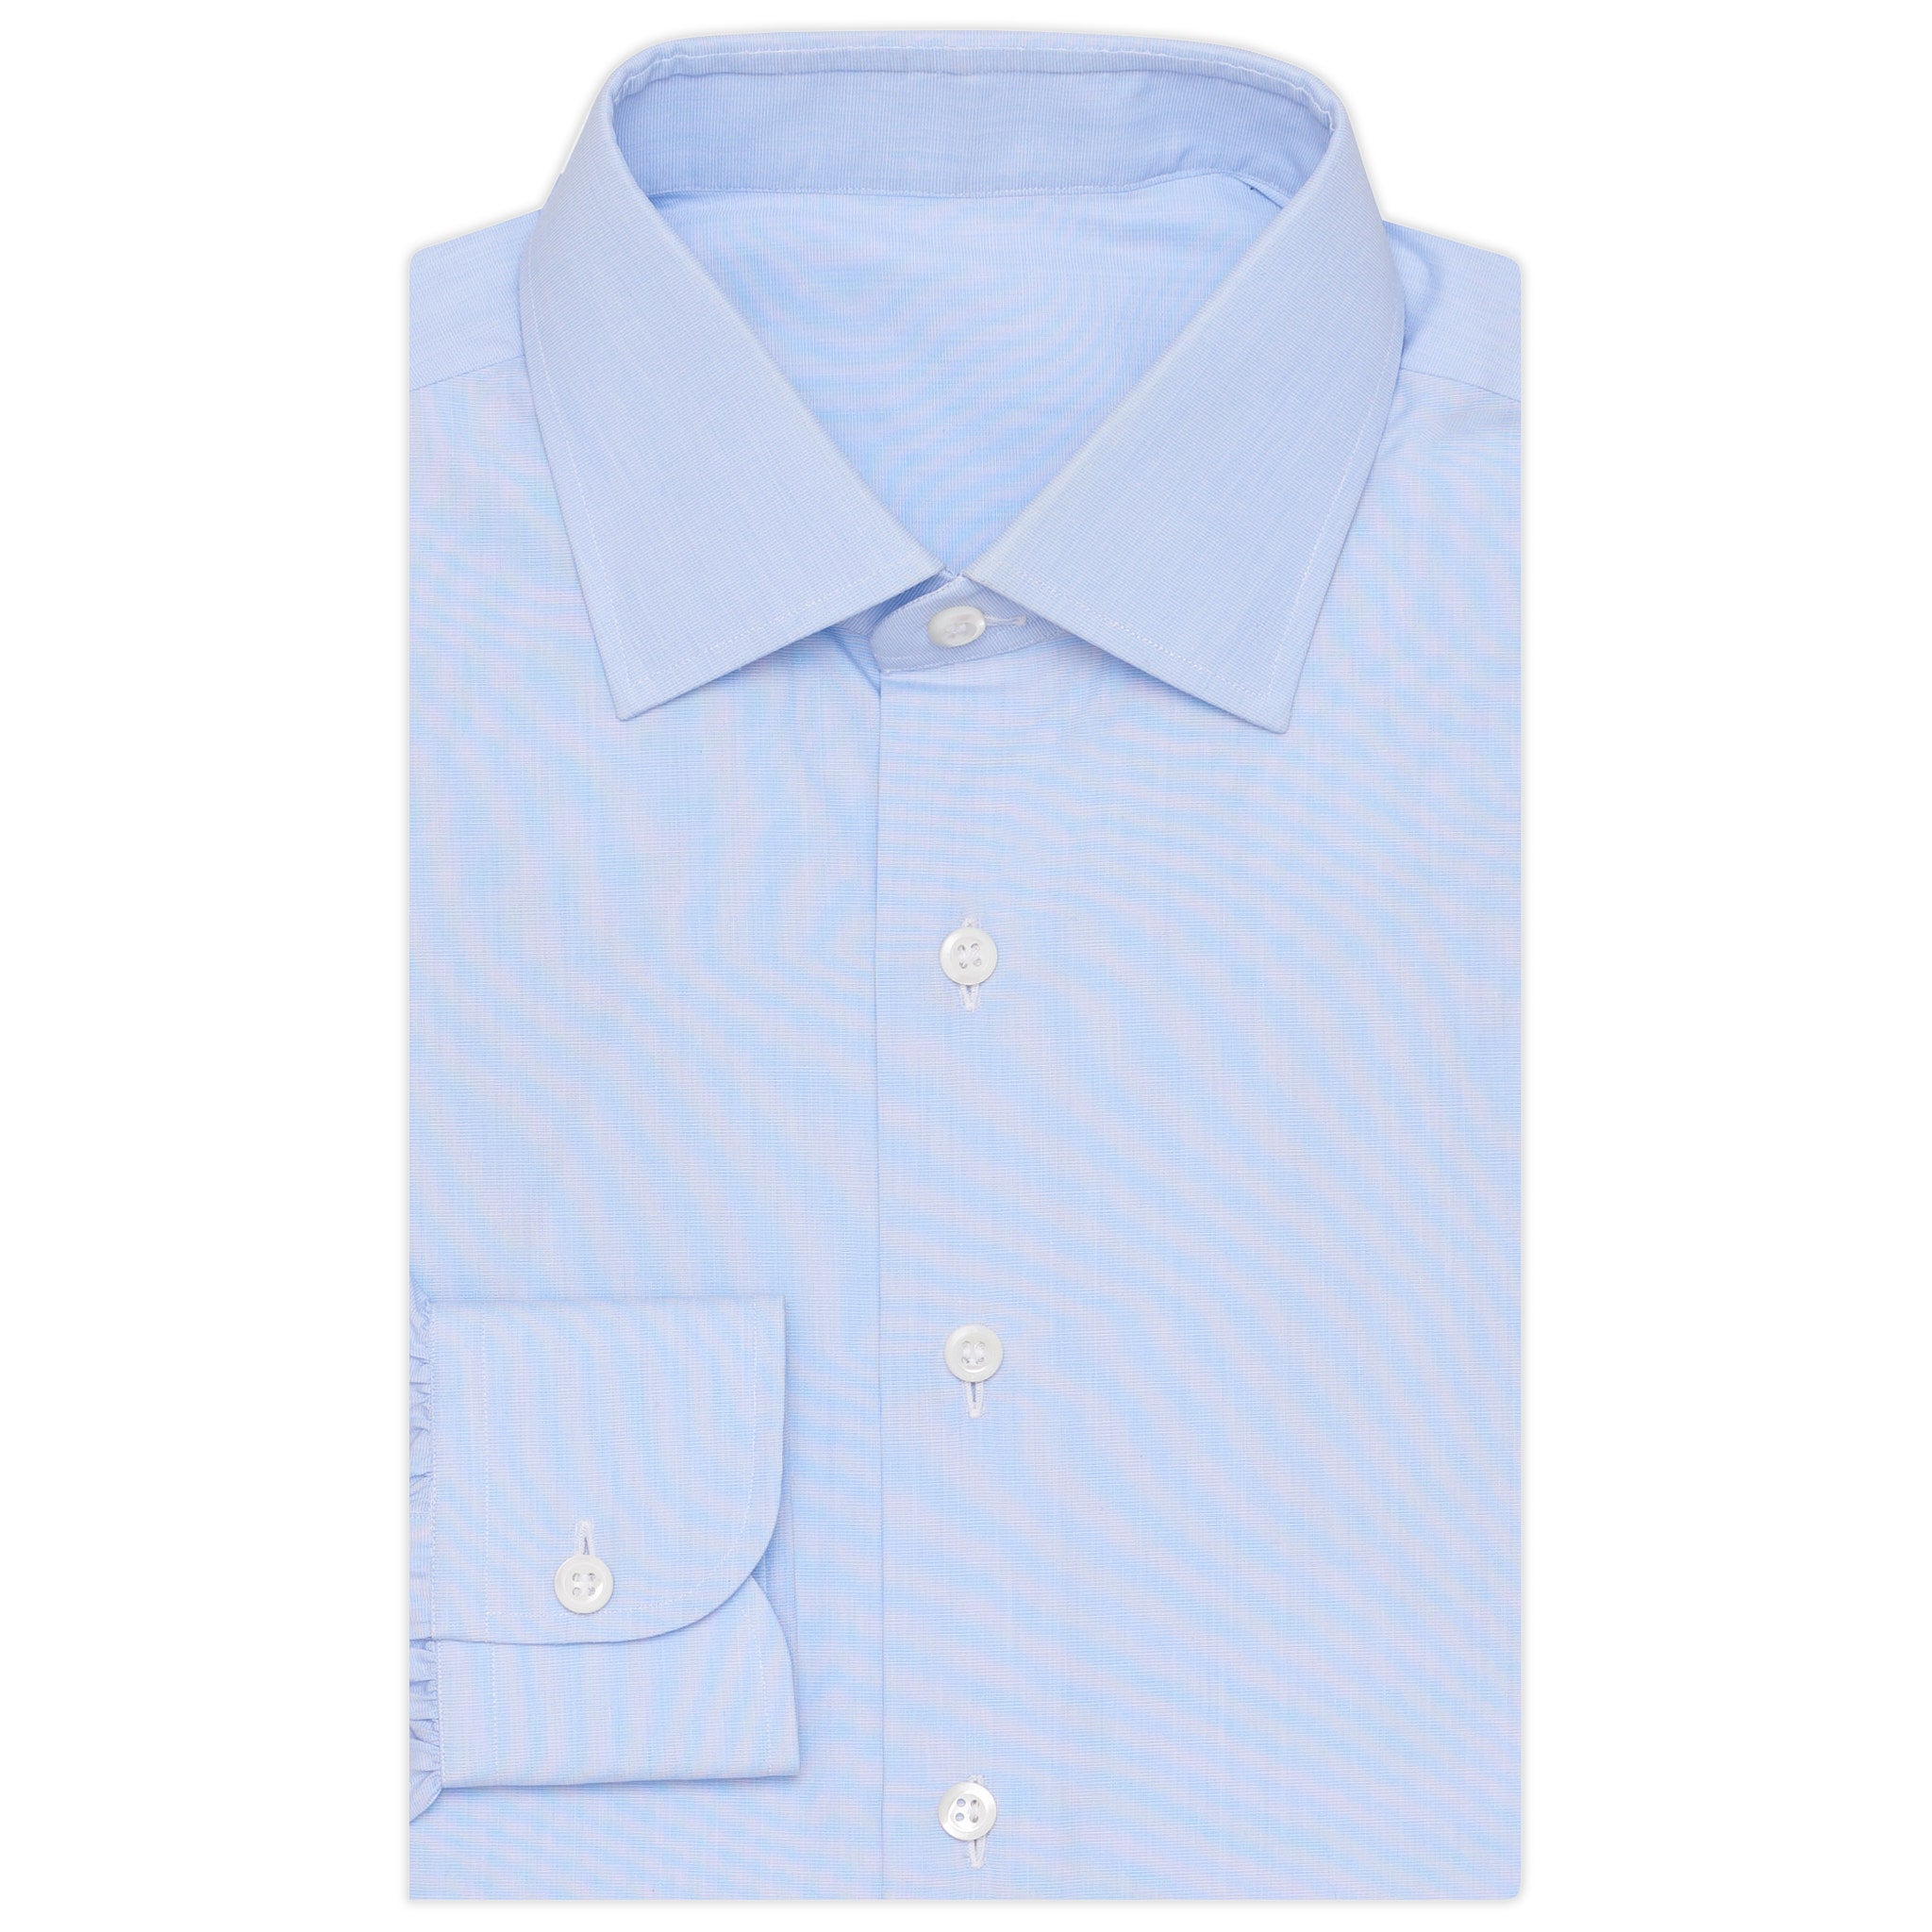 BESPOKE ATHENS Handmade Blue End-on-End Cotton Spalla Camicia Dress Shirt NEW BESPOKE ATHENS